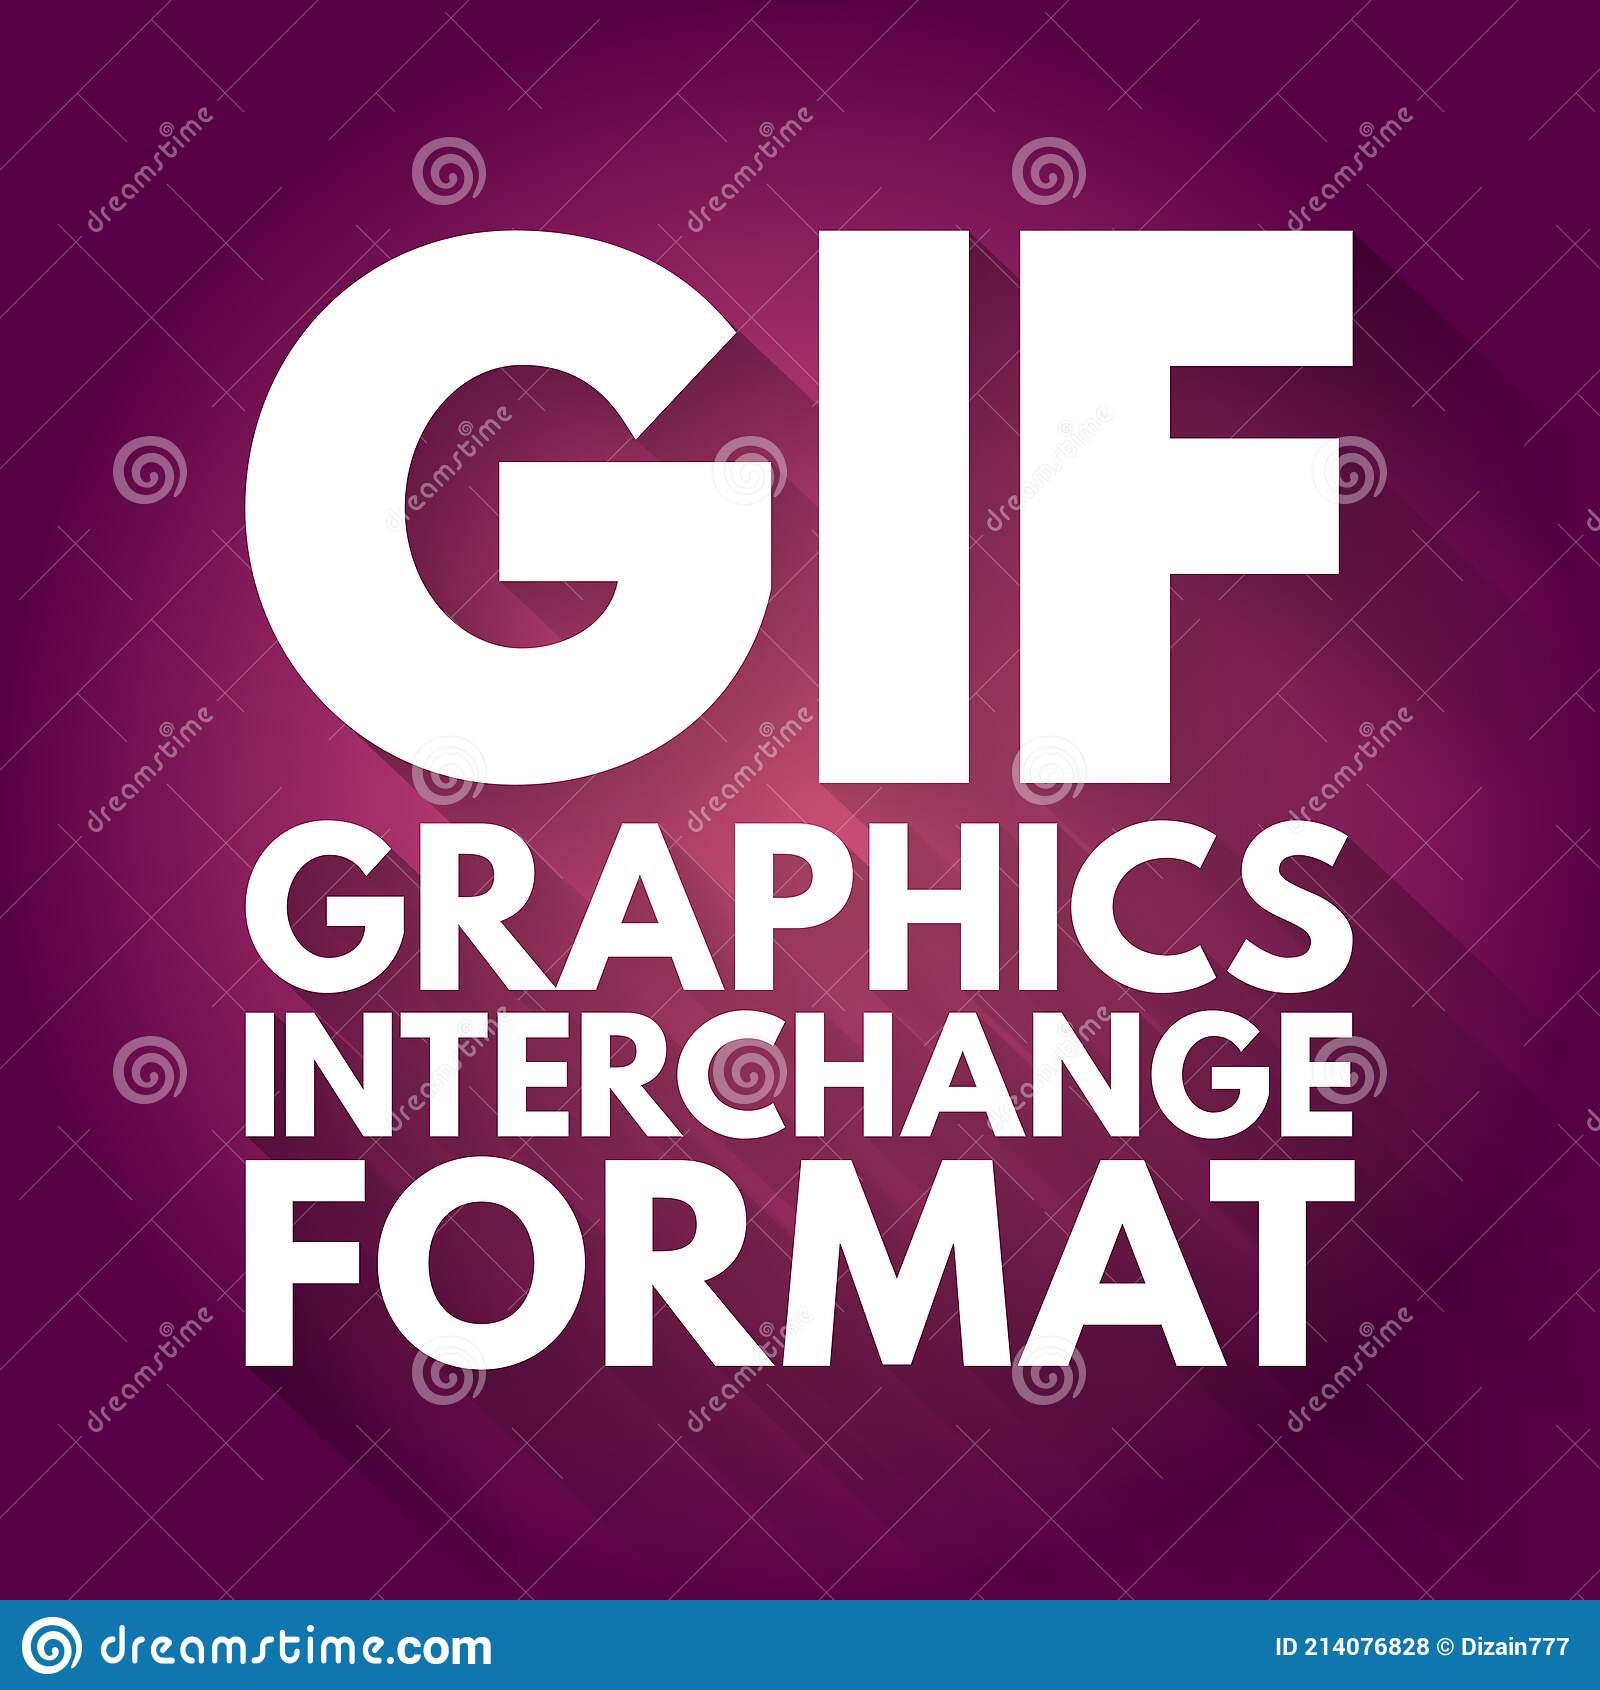 Graphics Interchange Format